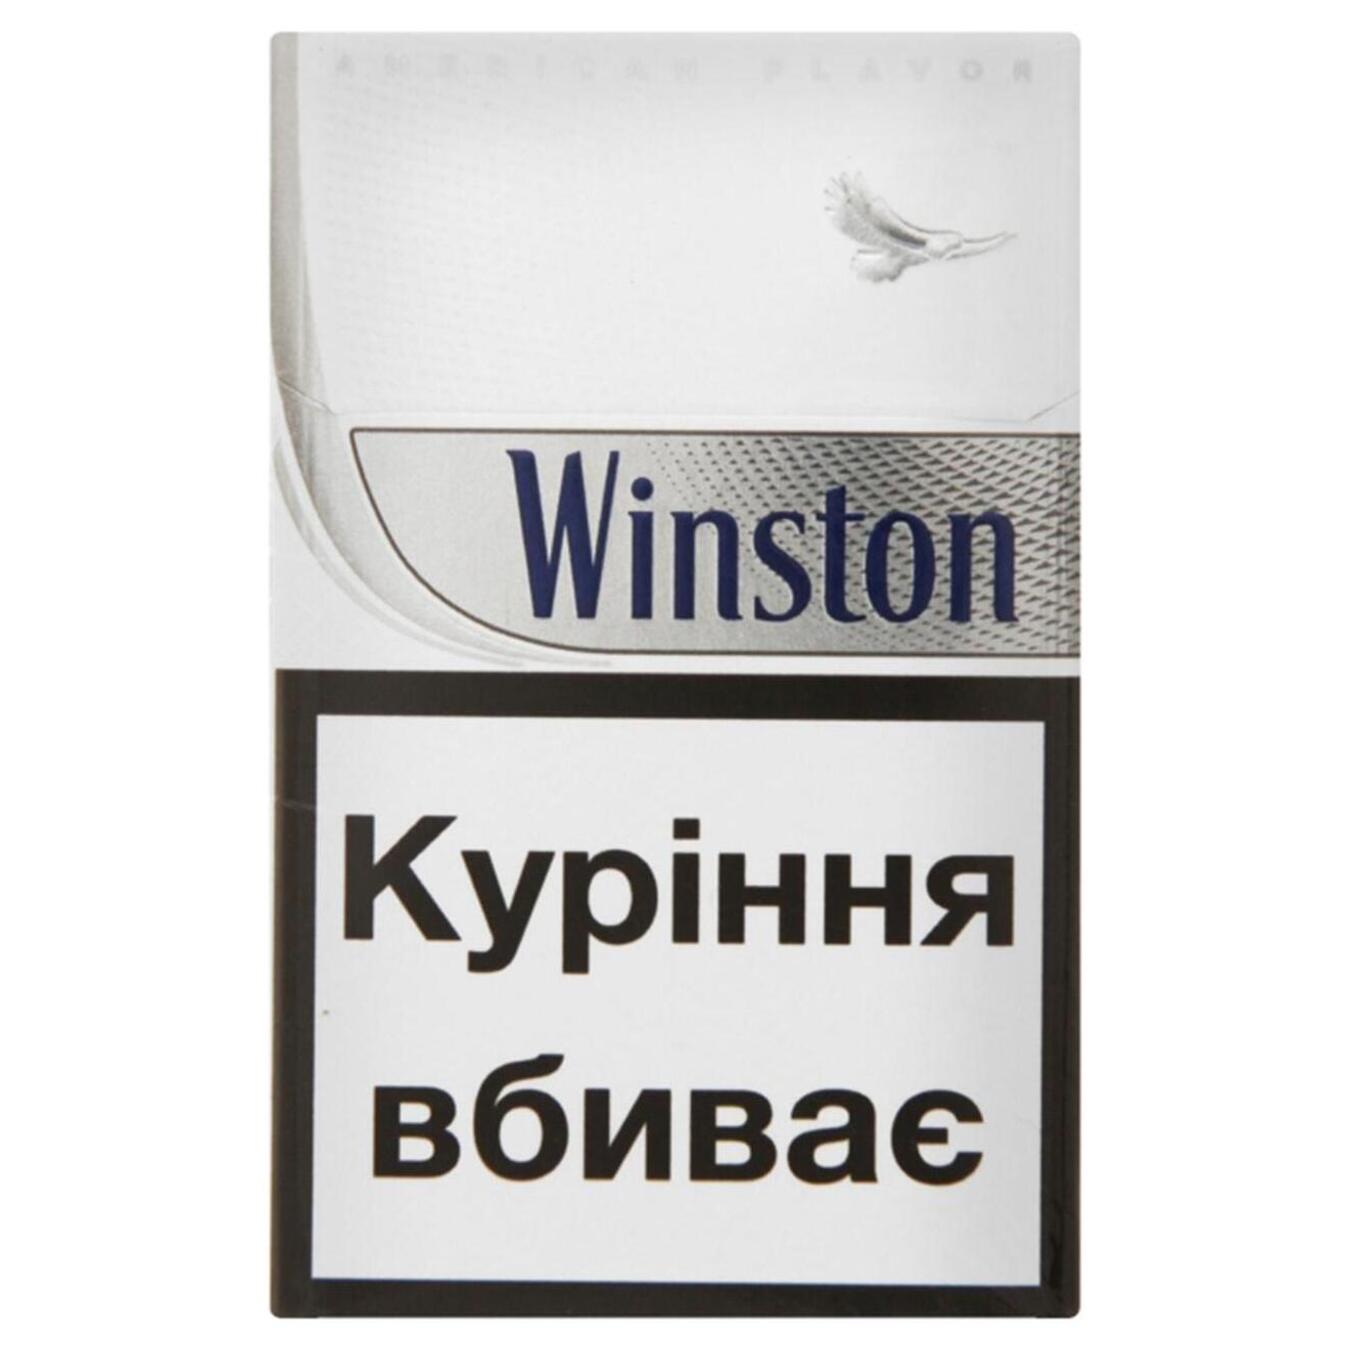 Сигареты Winston Silver (цена указана без акциза)